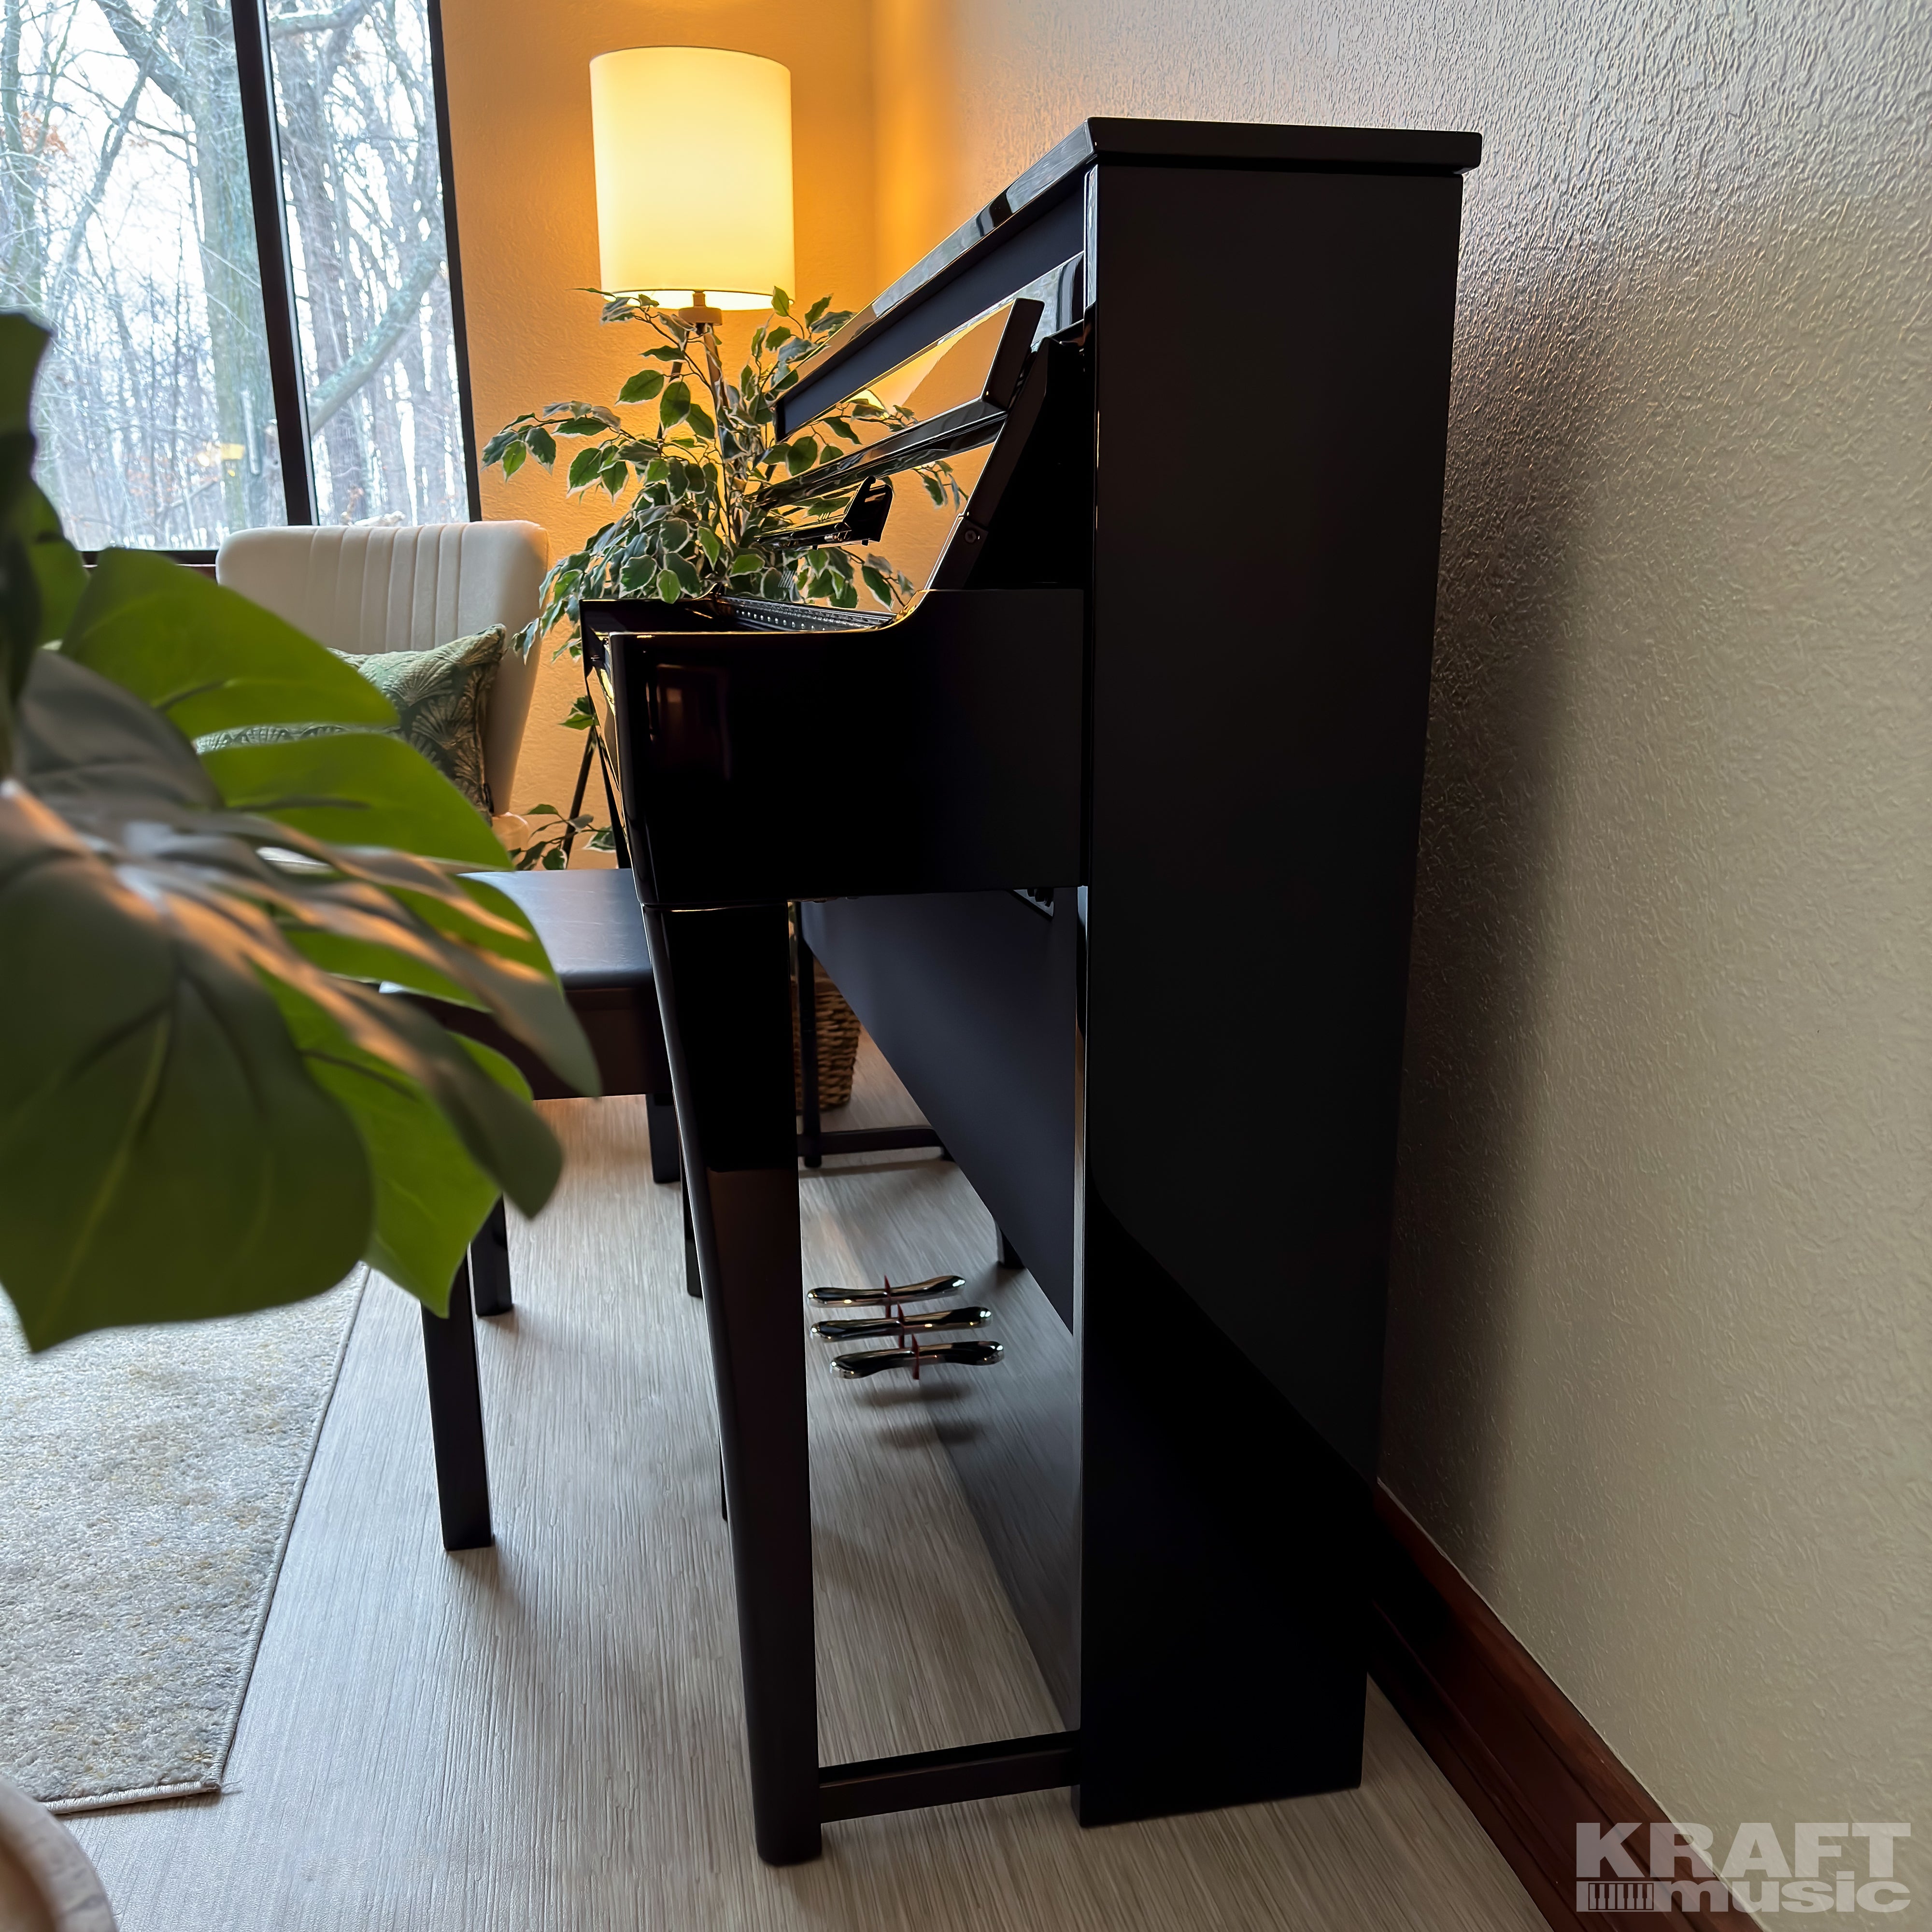 Yamaha AvantGrand NU1XA Hybrid Piano - Polished Ebony - side view in a stylish living space